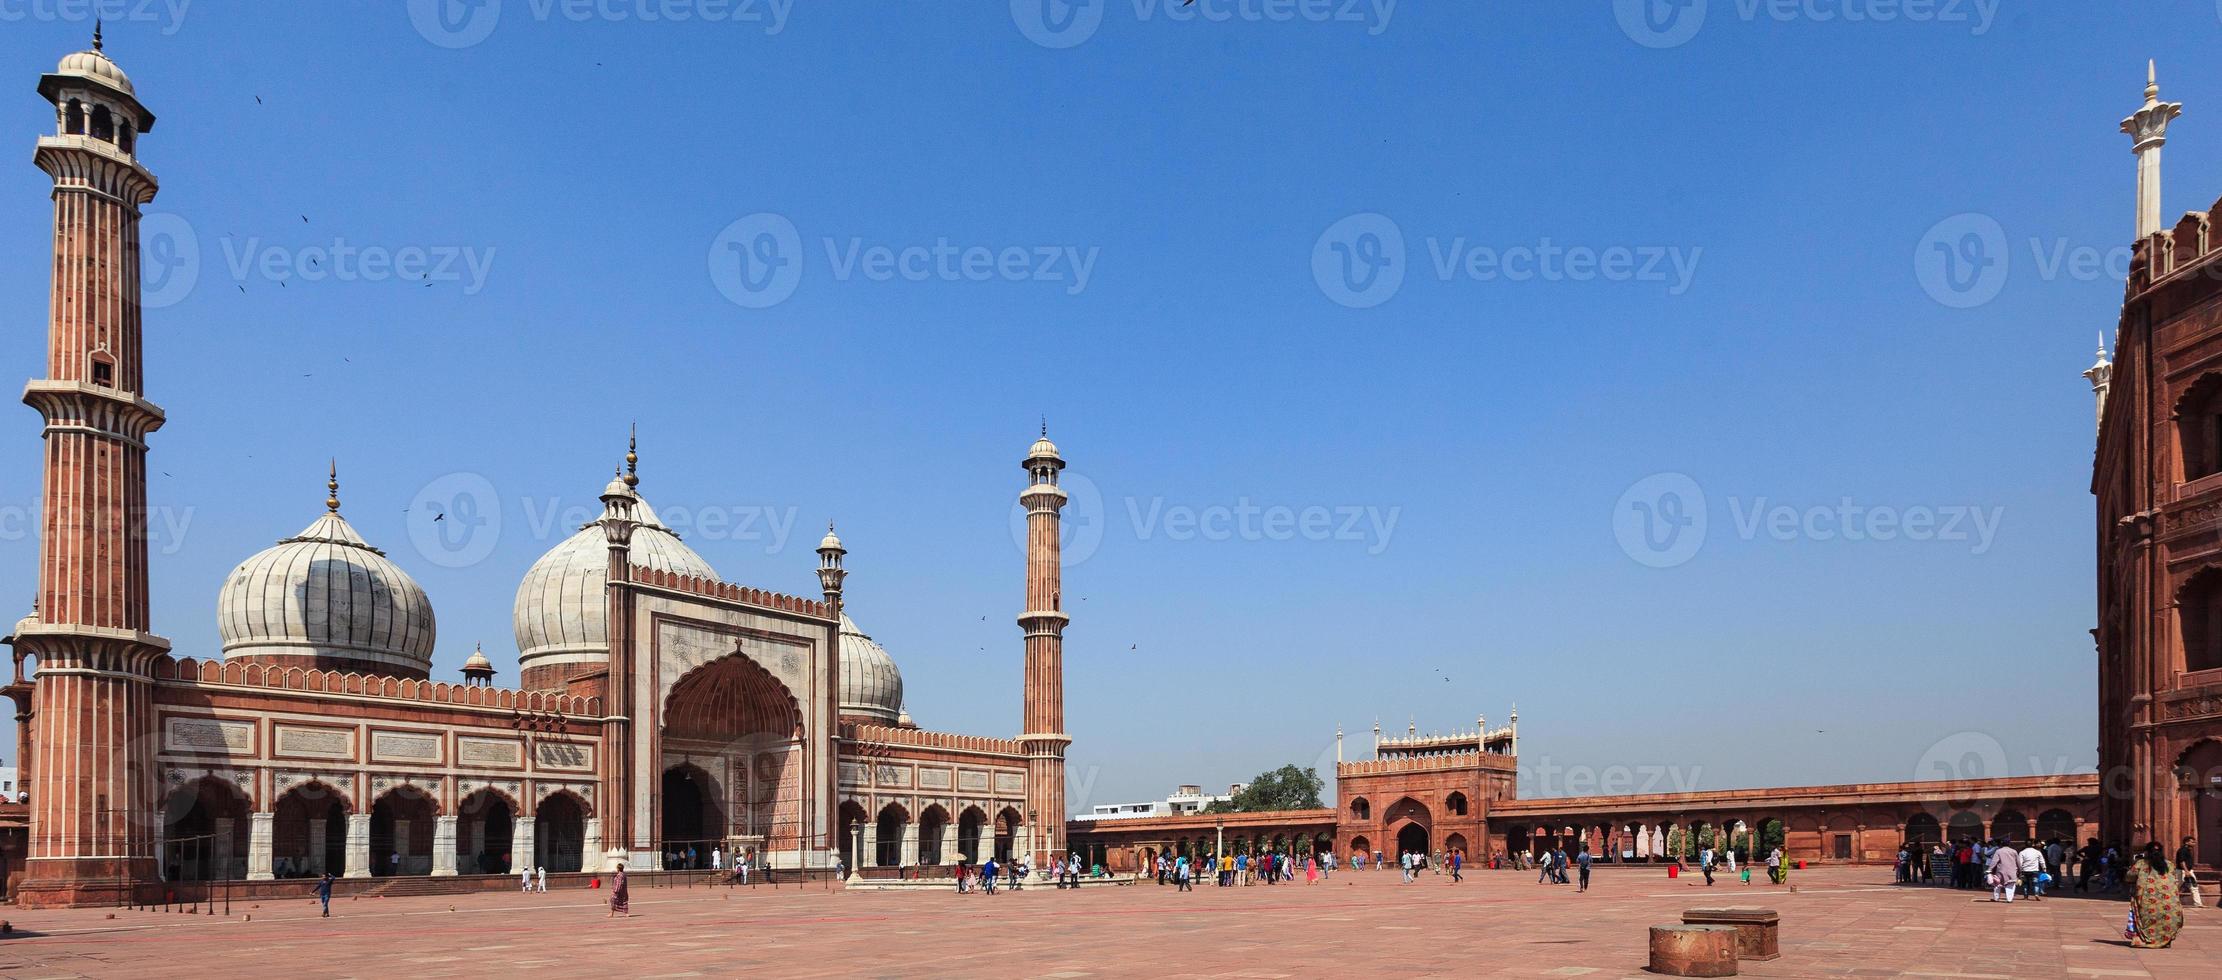 jama masjid moskee nieuwe delhi india foto